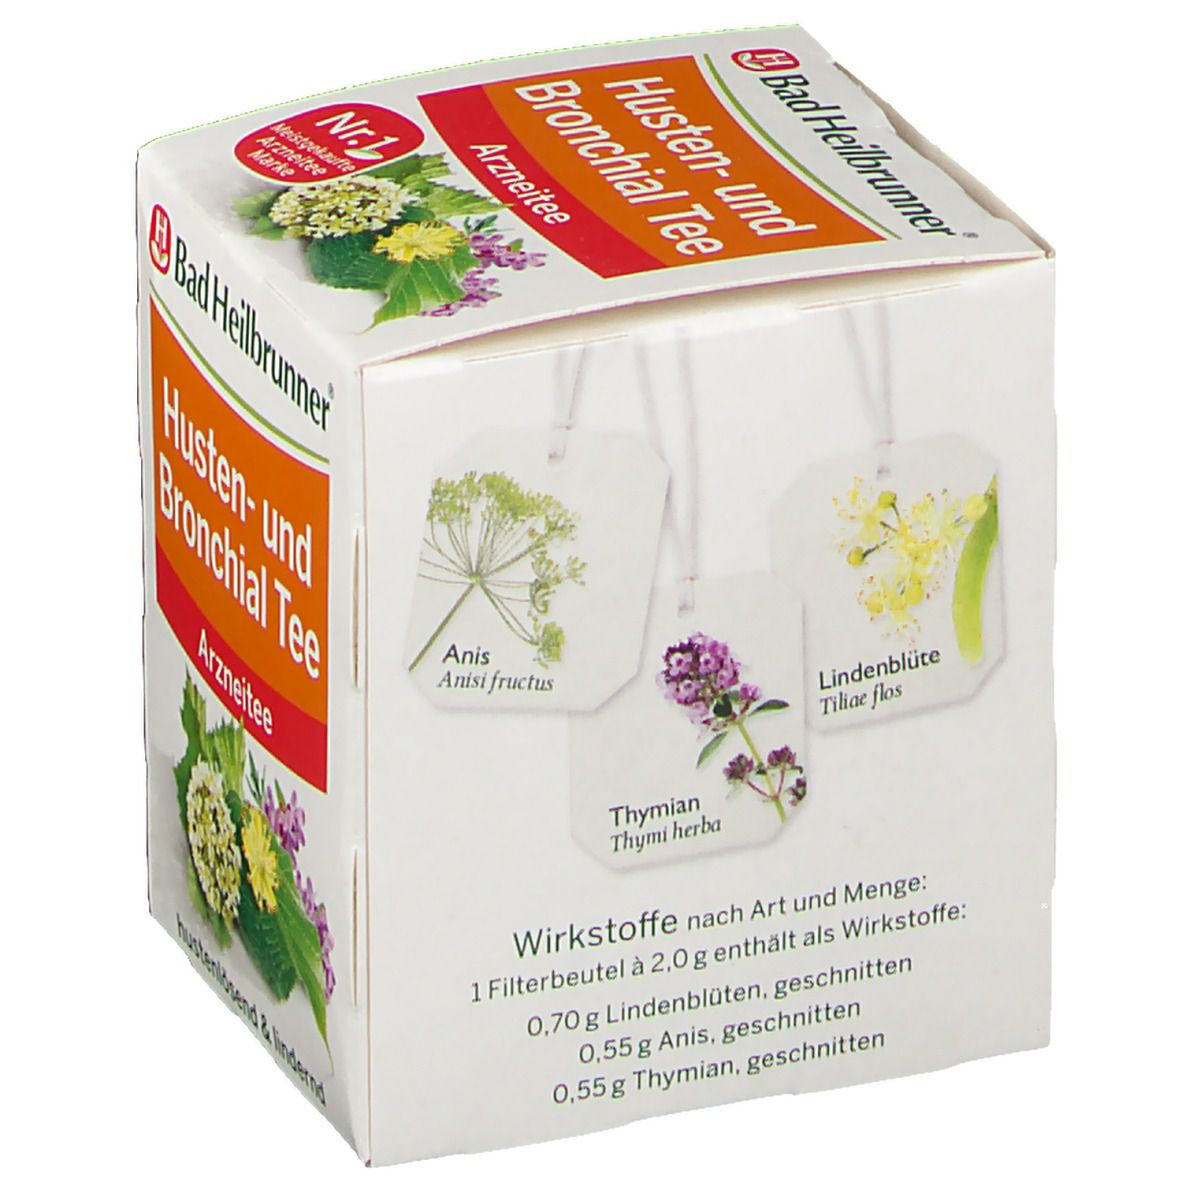 Bad Heilbrunner® Husten- und Bronchial Tee